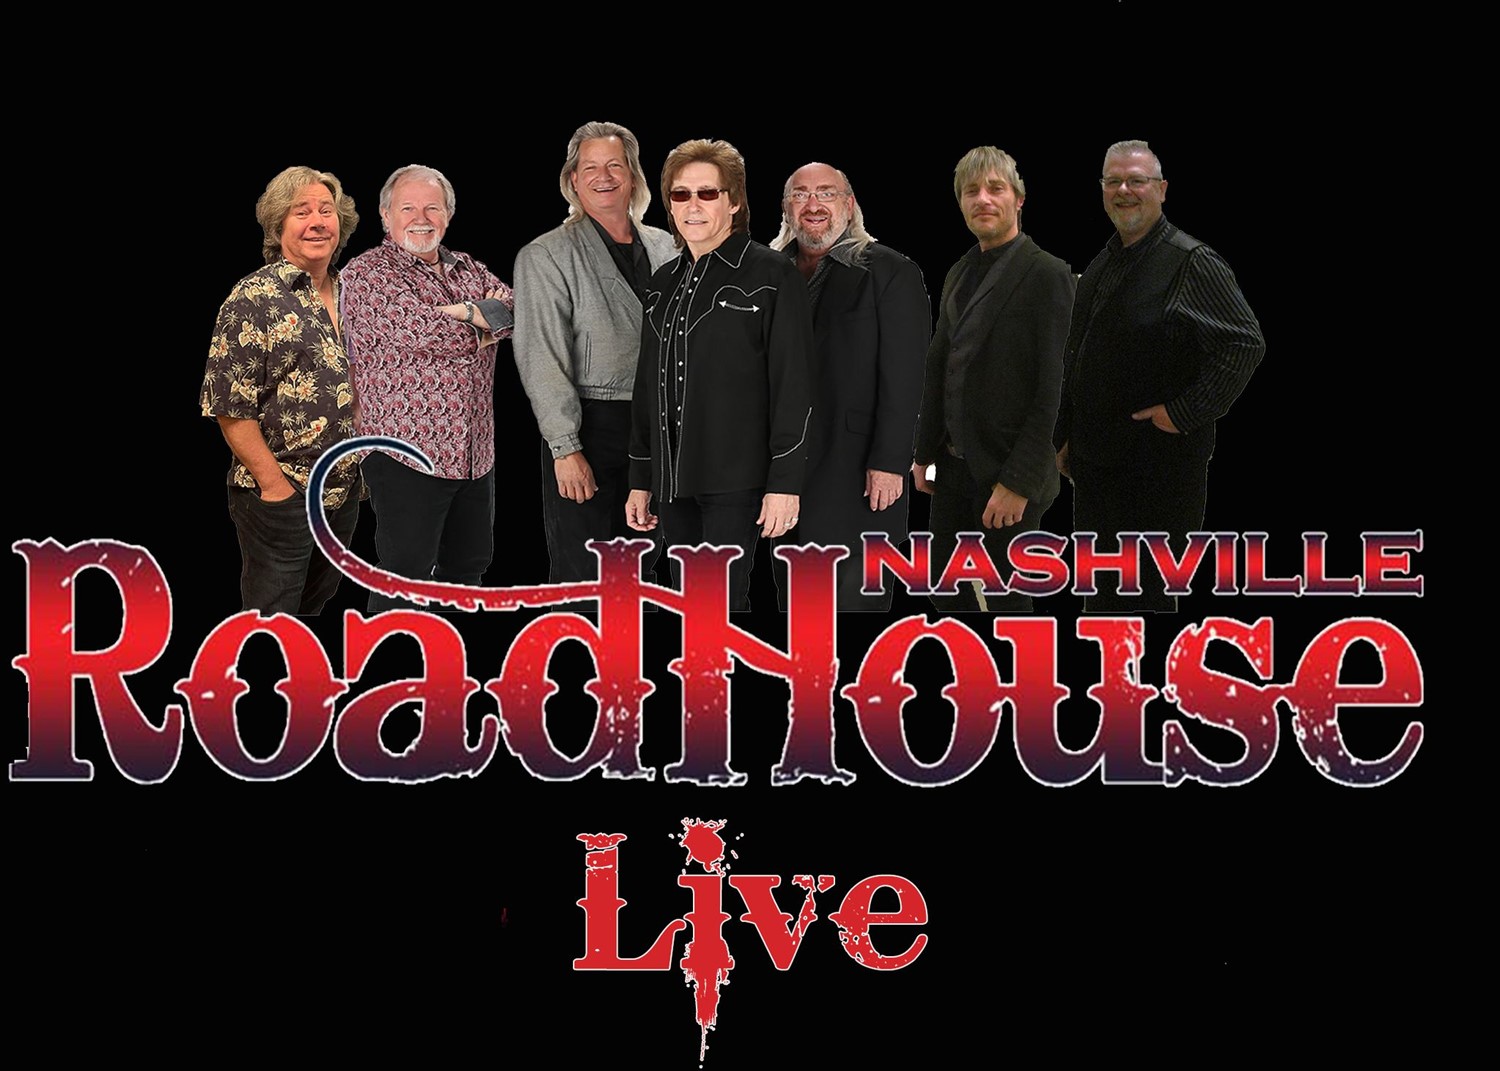 Nashville Roadhouse Live  on dic. 17, 00:00@Pierce Arrow Theater - Elegir asientoCompra entradas y obtén información ennashvilleroadhouse.com bransonstartheater